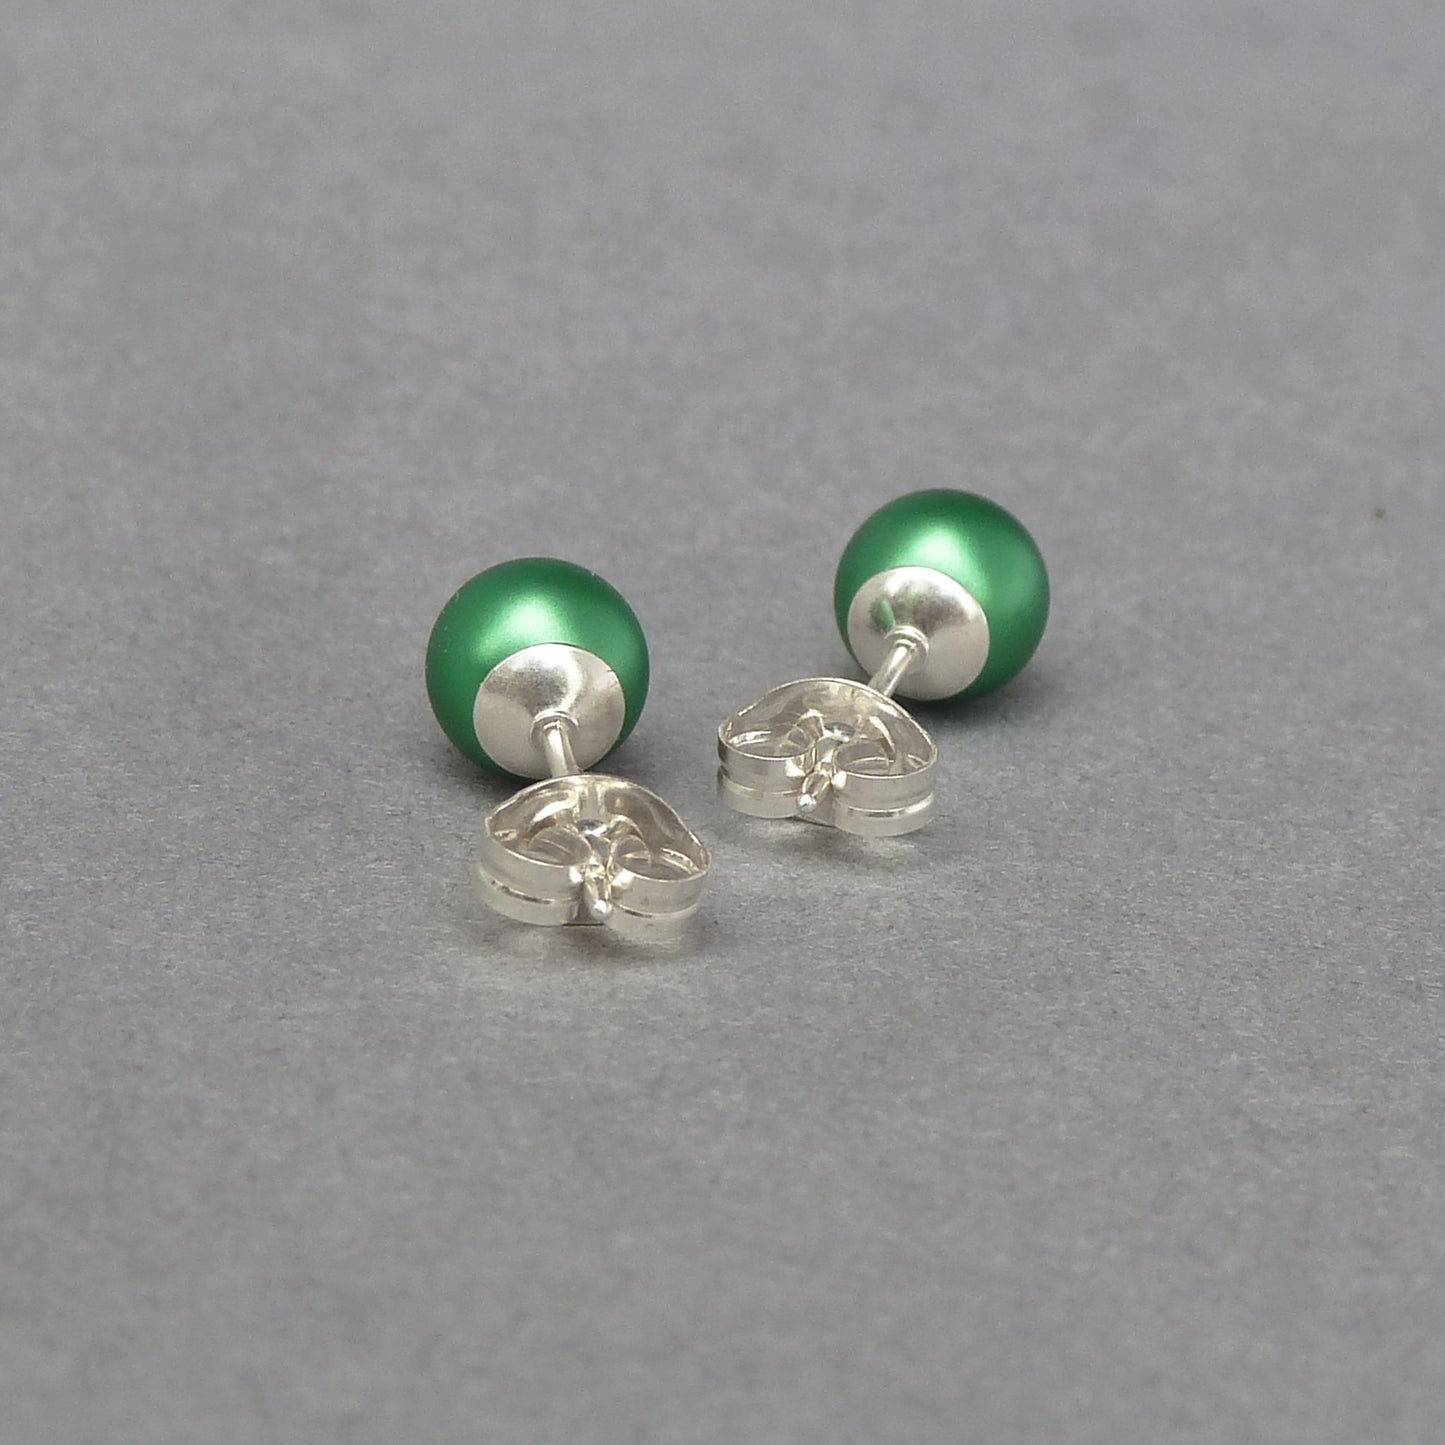 Small green pearl stud earrings